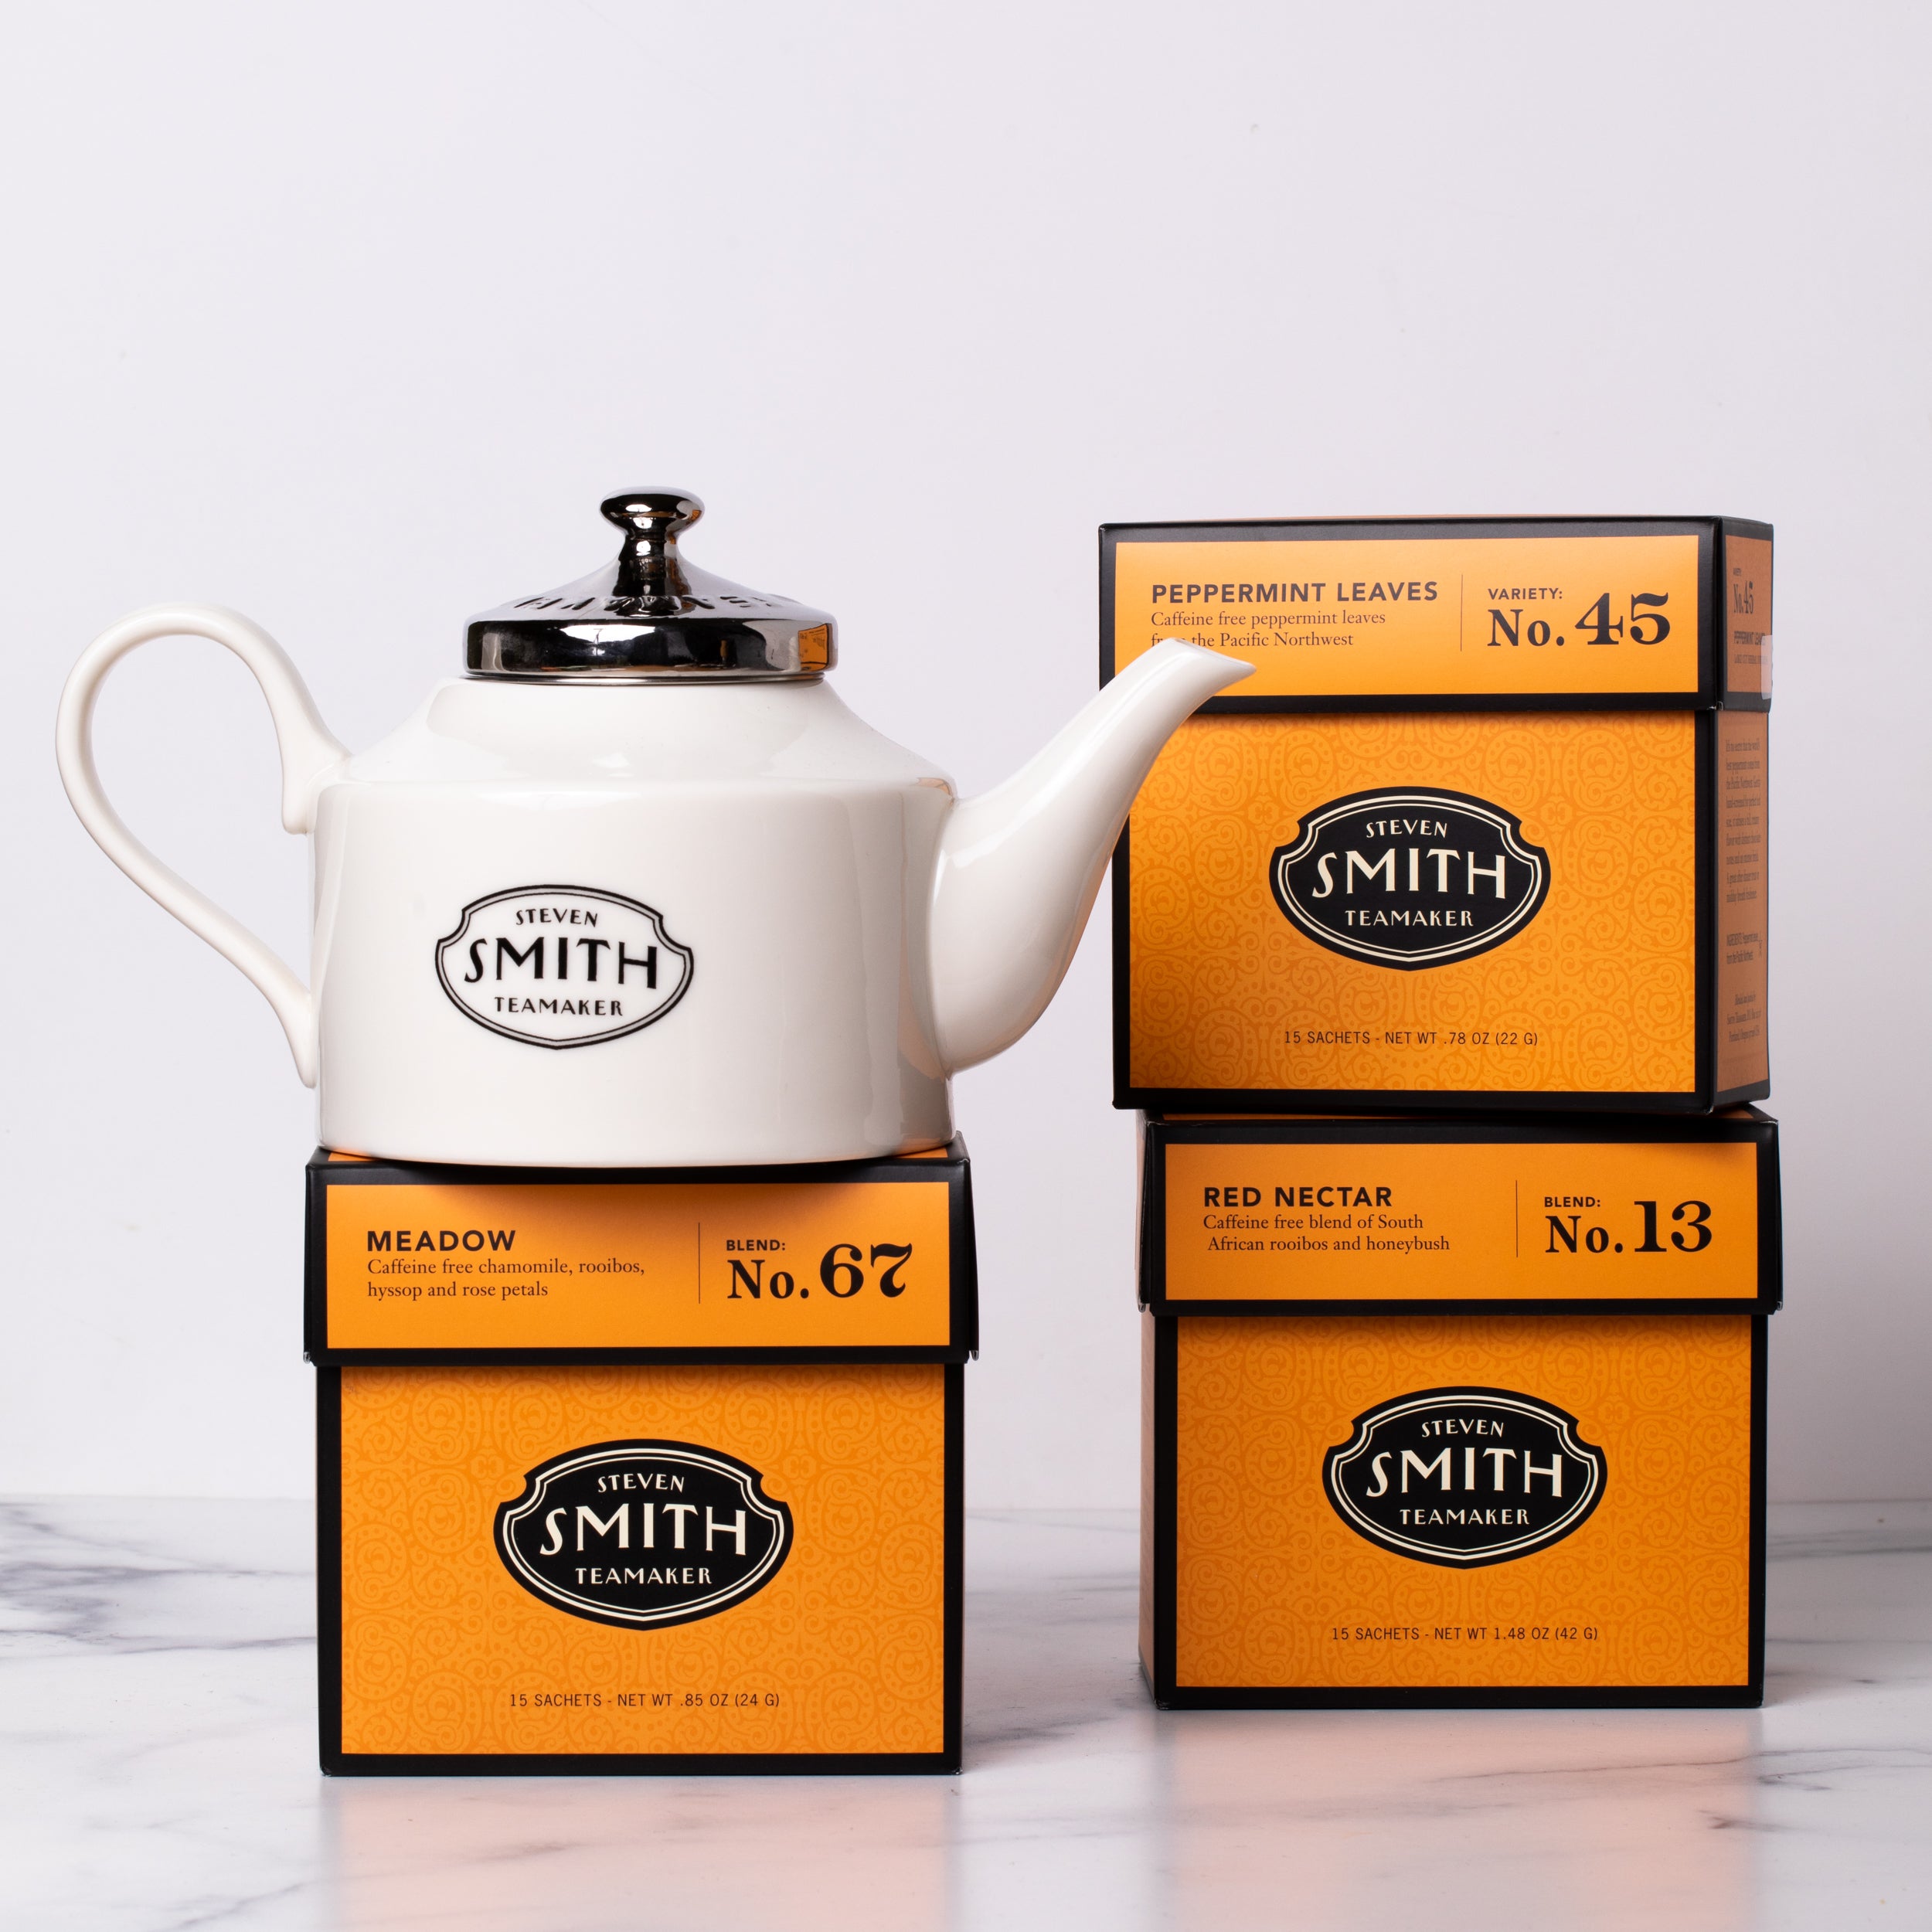 Three orange cartons of herbal tea with a white porcelain teapot.